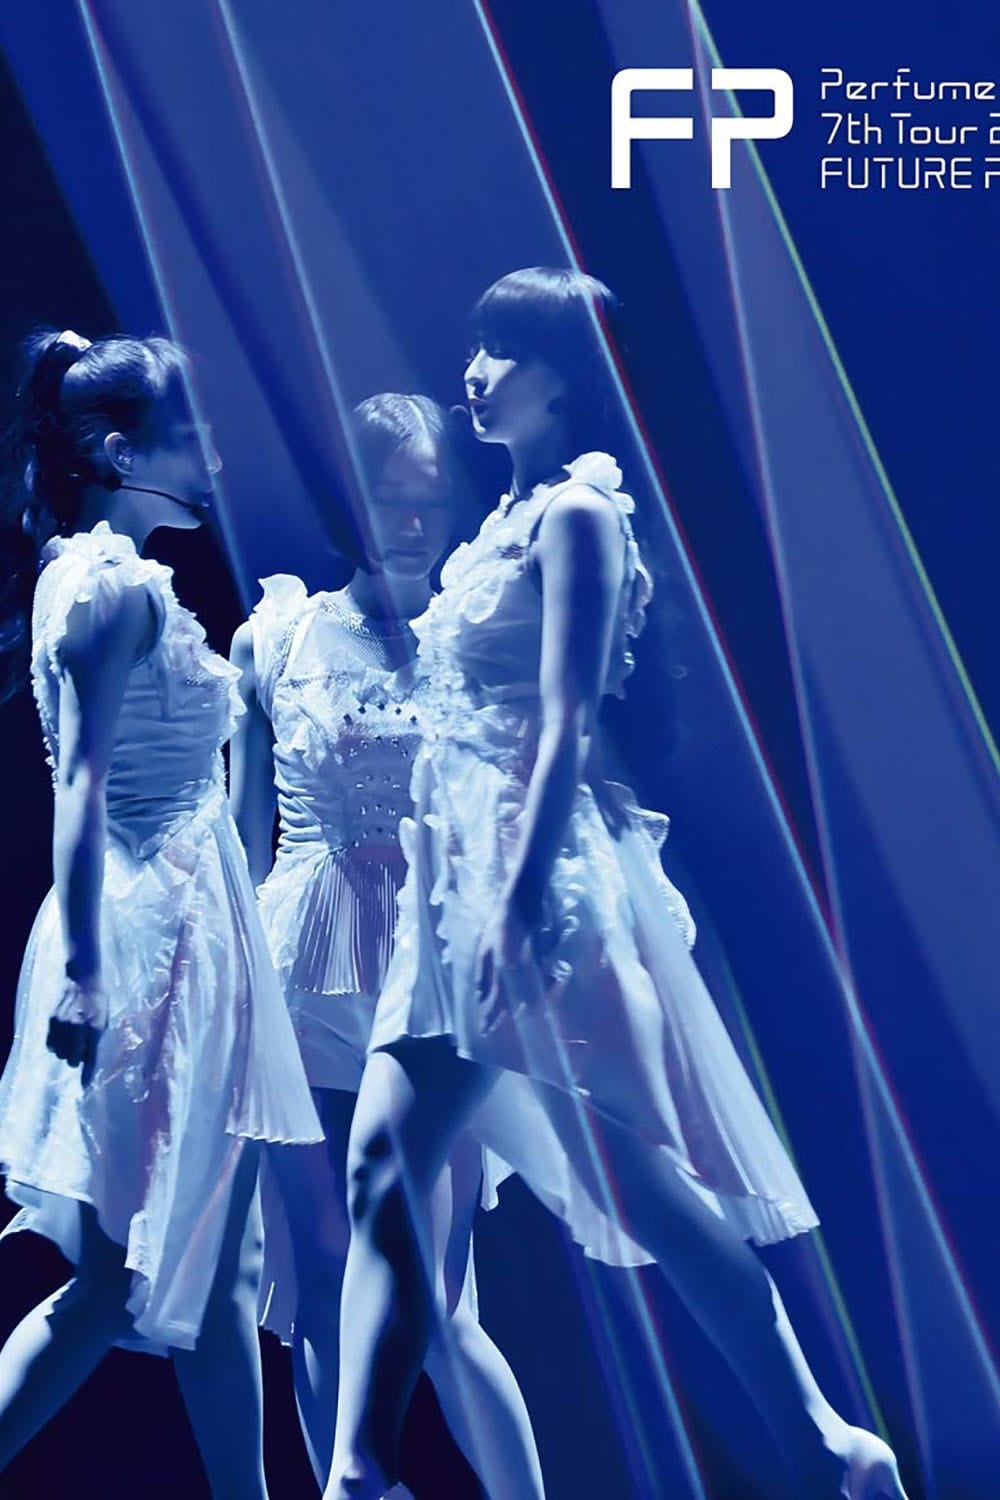 Perfume 7th Tour 2018  "Future Pop"